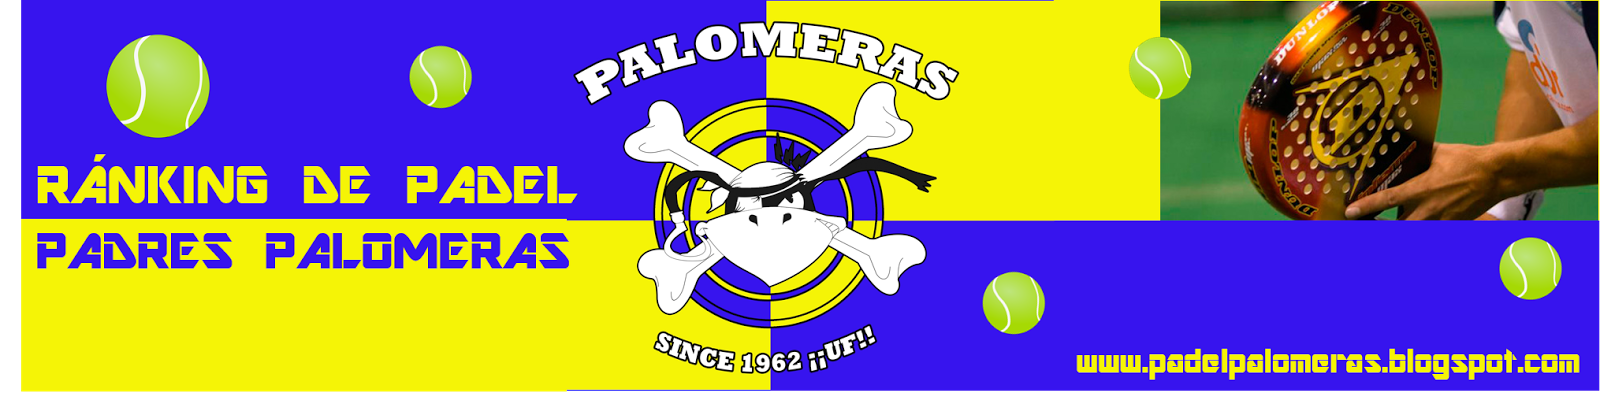 RÁNKING DE PÁDEL CLUB PALOMERAS